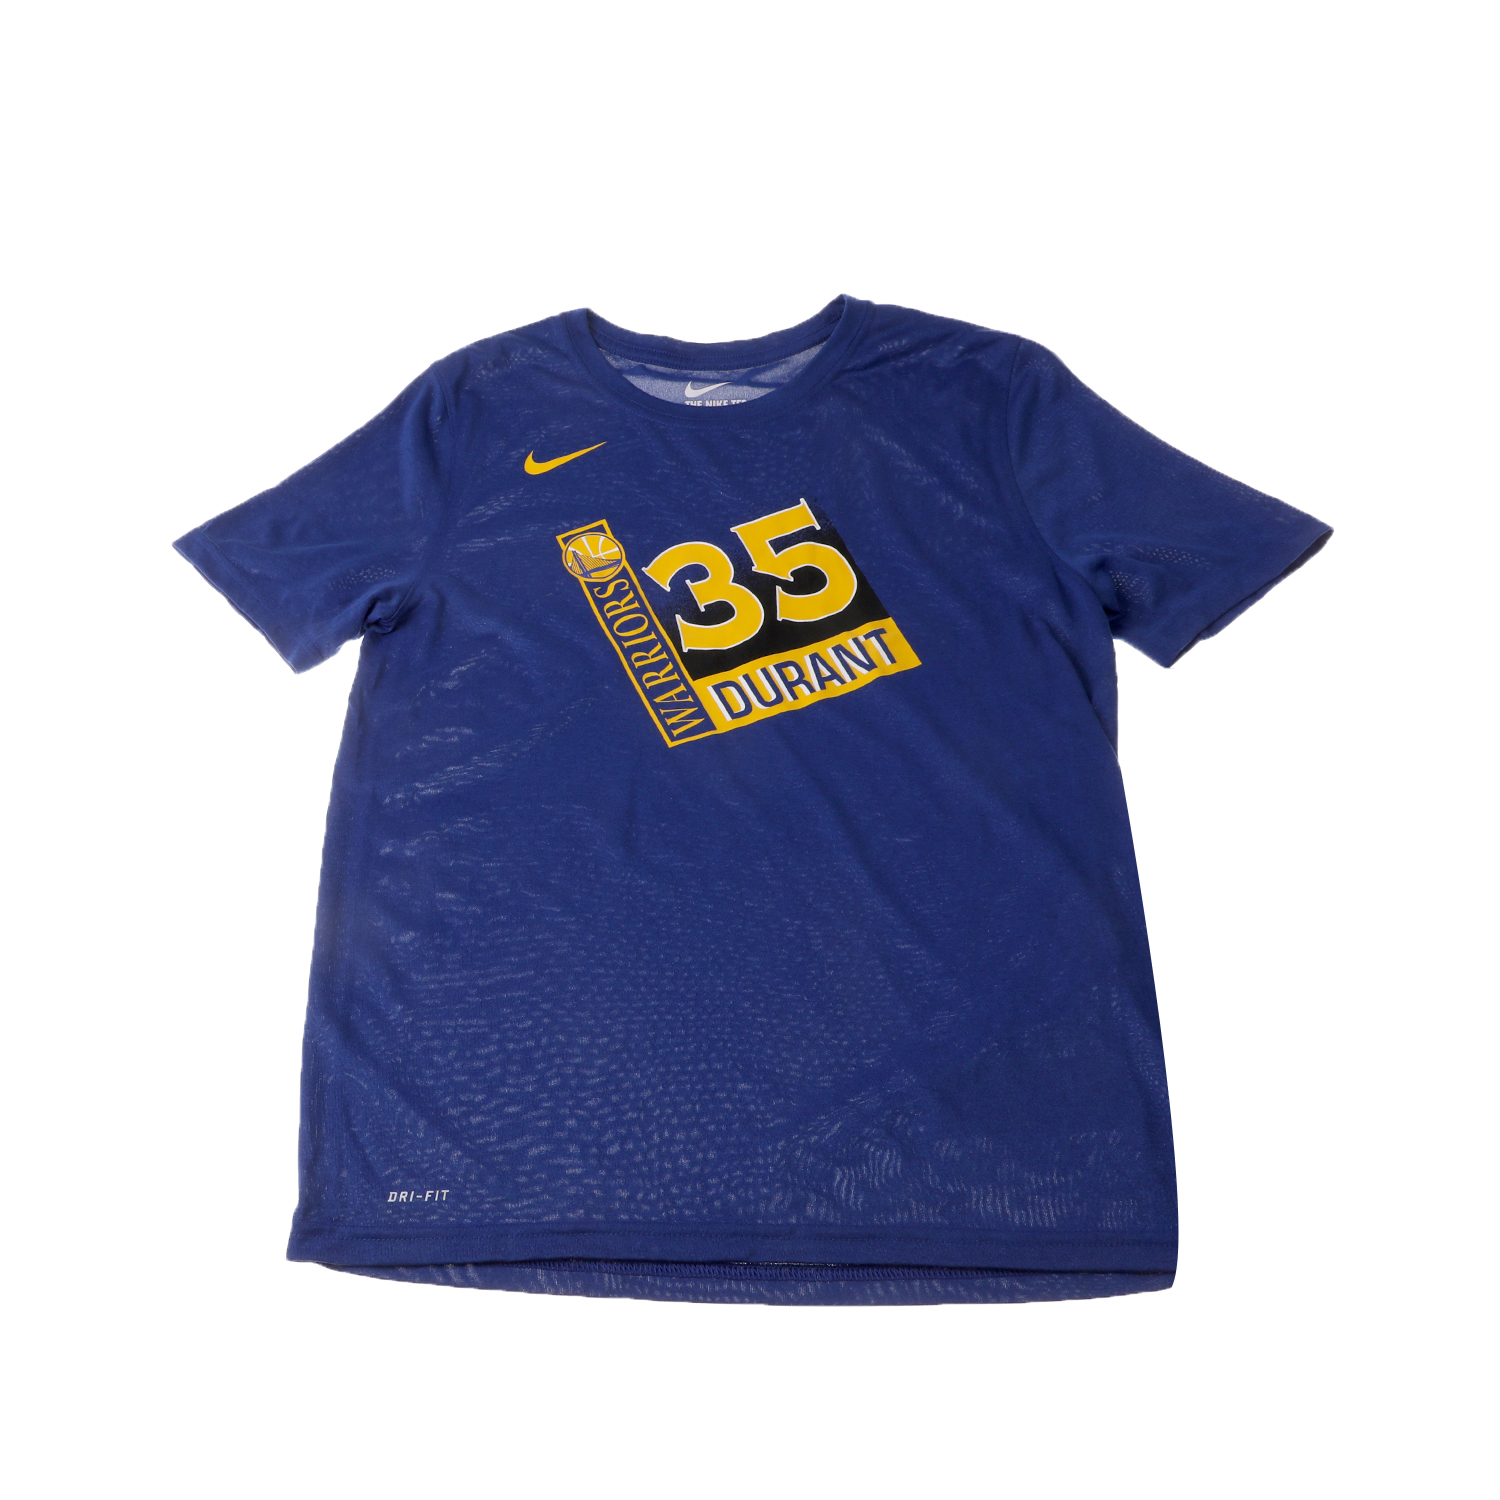 NIKE - Παιδικό t-shirt NIKE DRY TEE ES PLAYER WARRIORS μπλε Παιδικά/Boys/Ρούχα/Αθλητικά